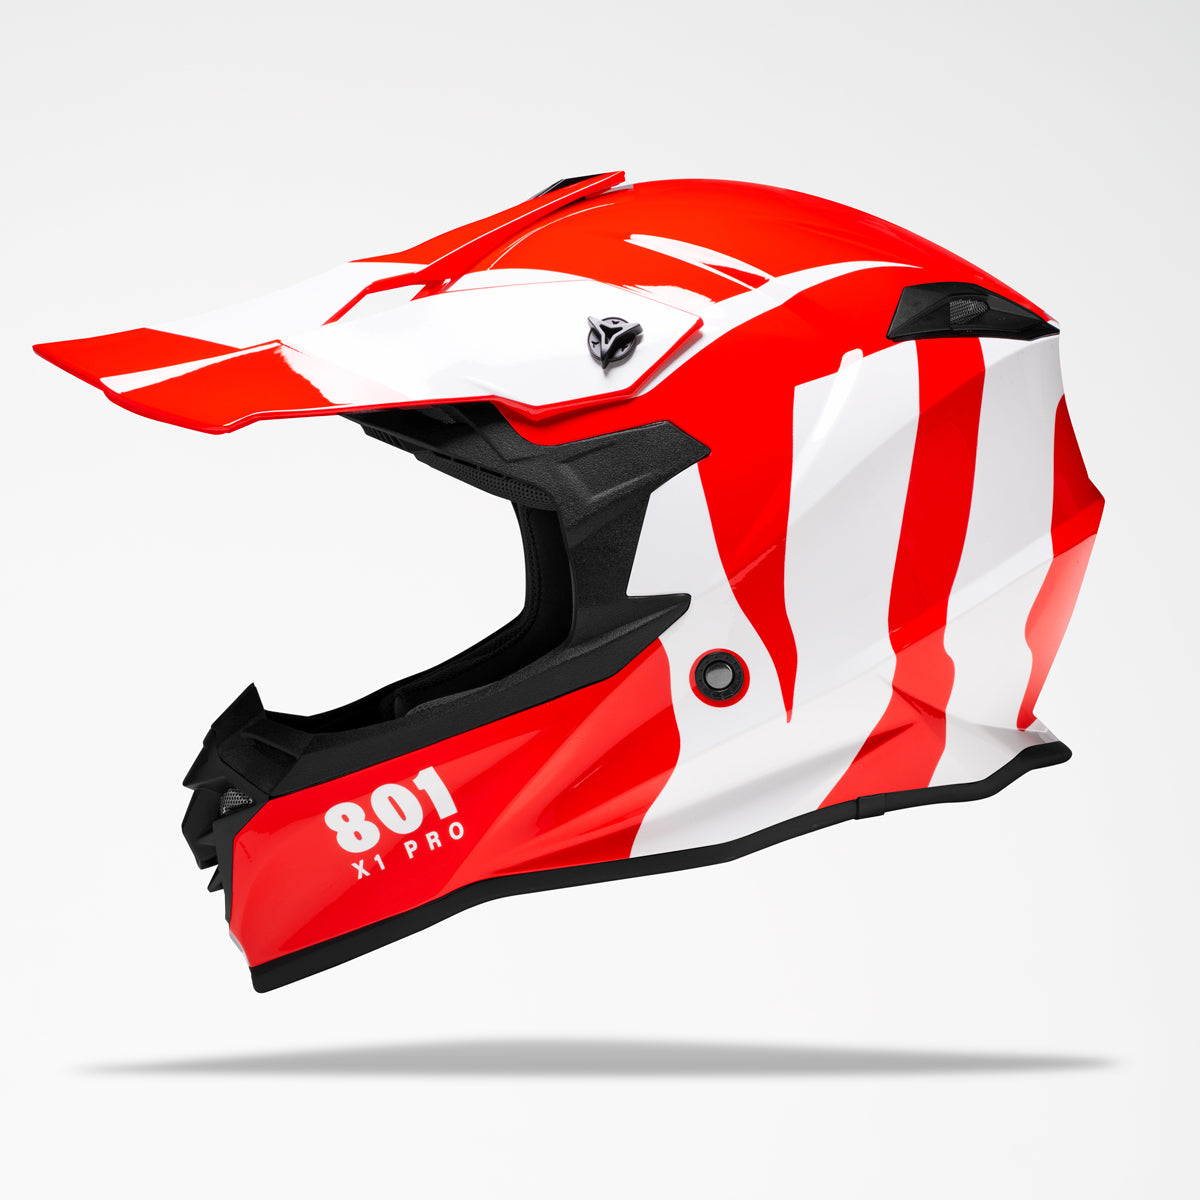 VOSS 801 X1 PRO DIRT RED/ WHITE WAVY HELMET - Voss Helmets